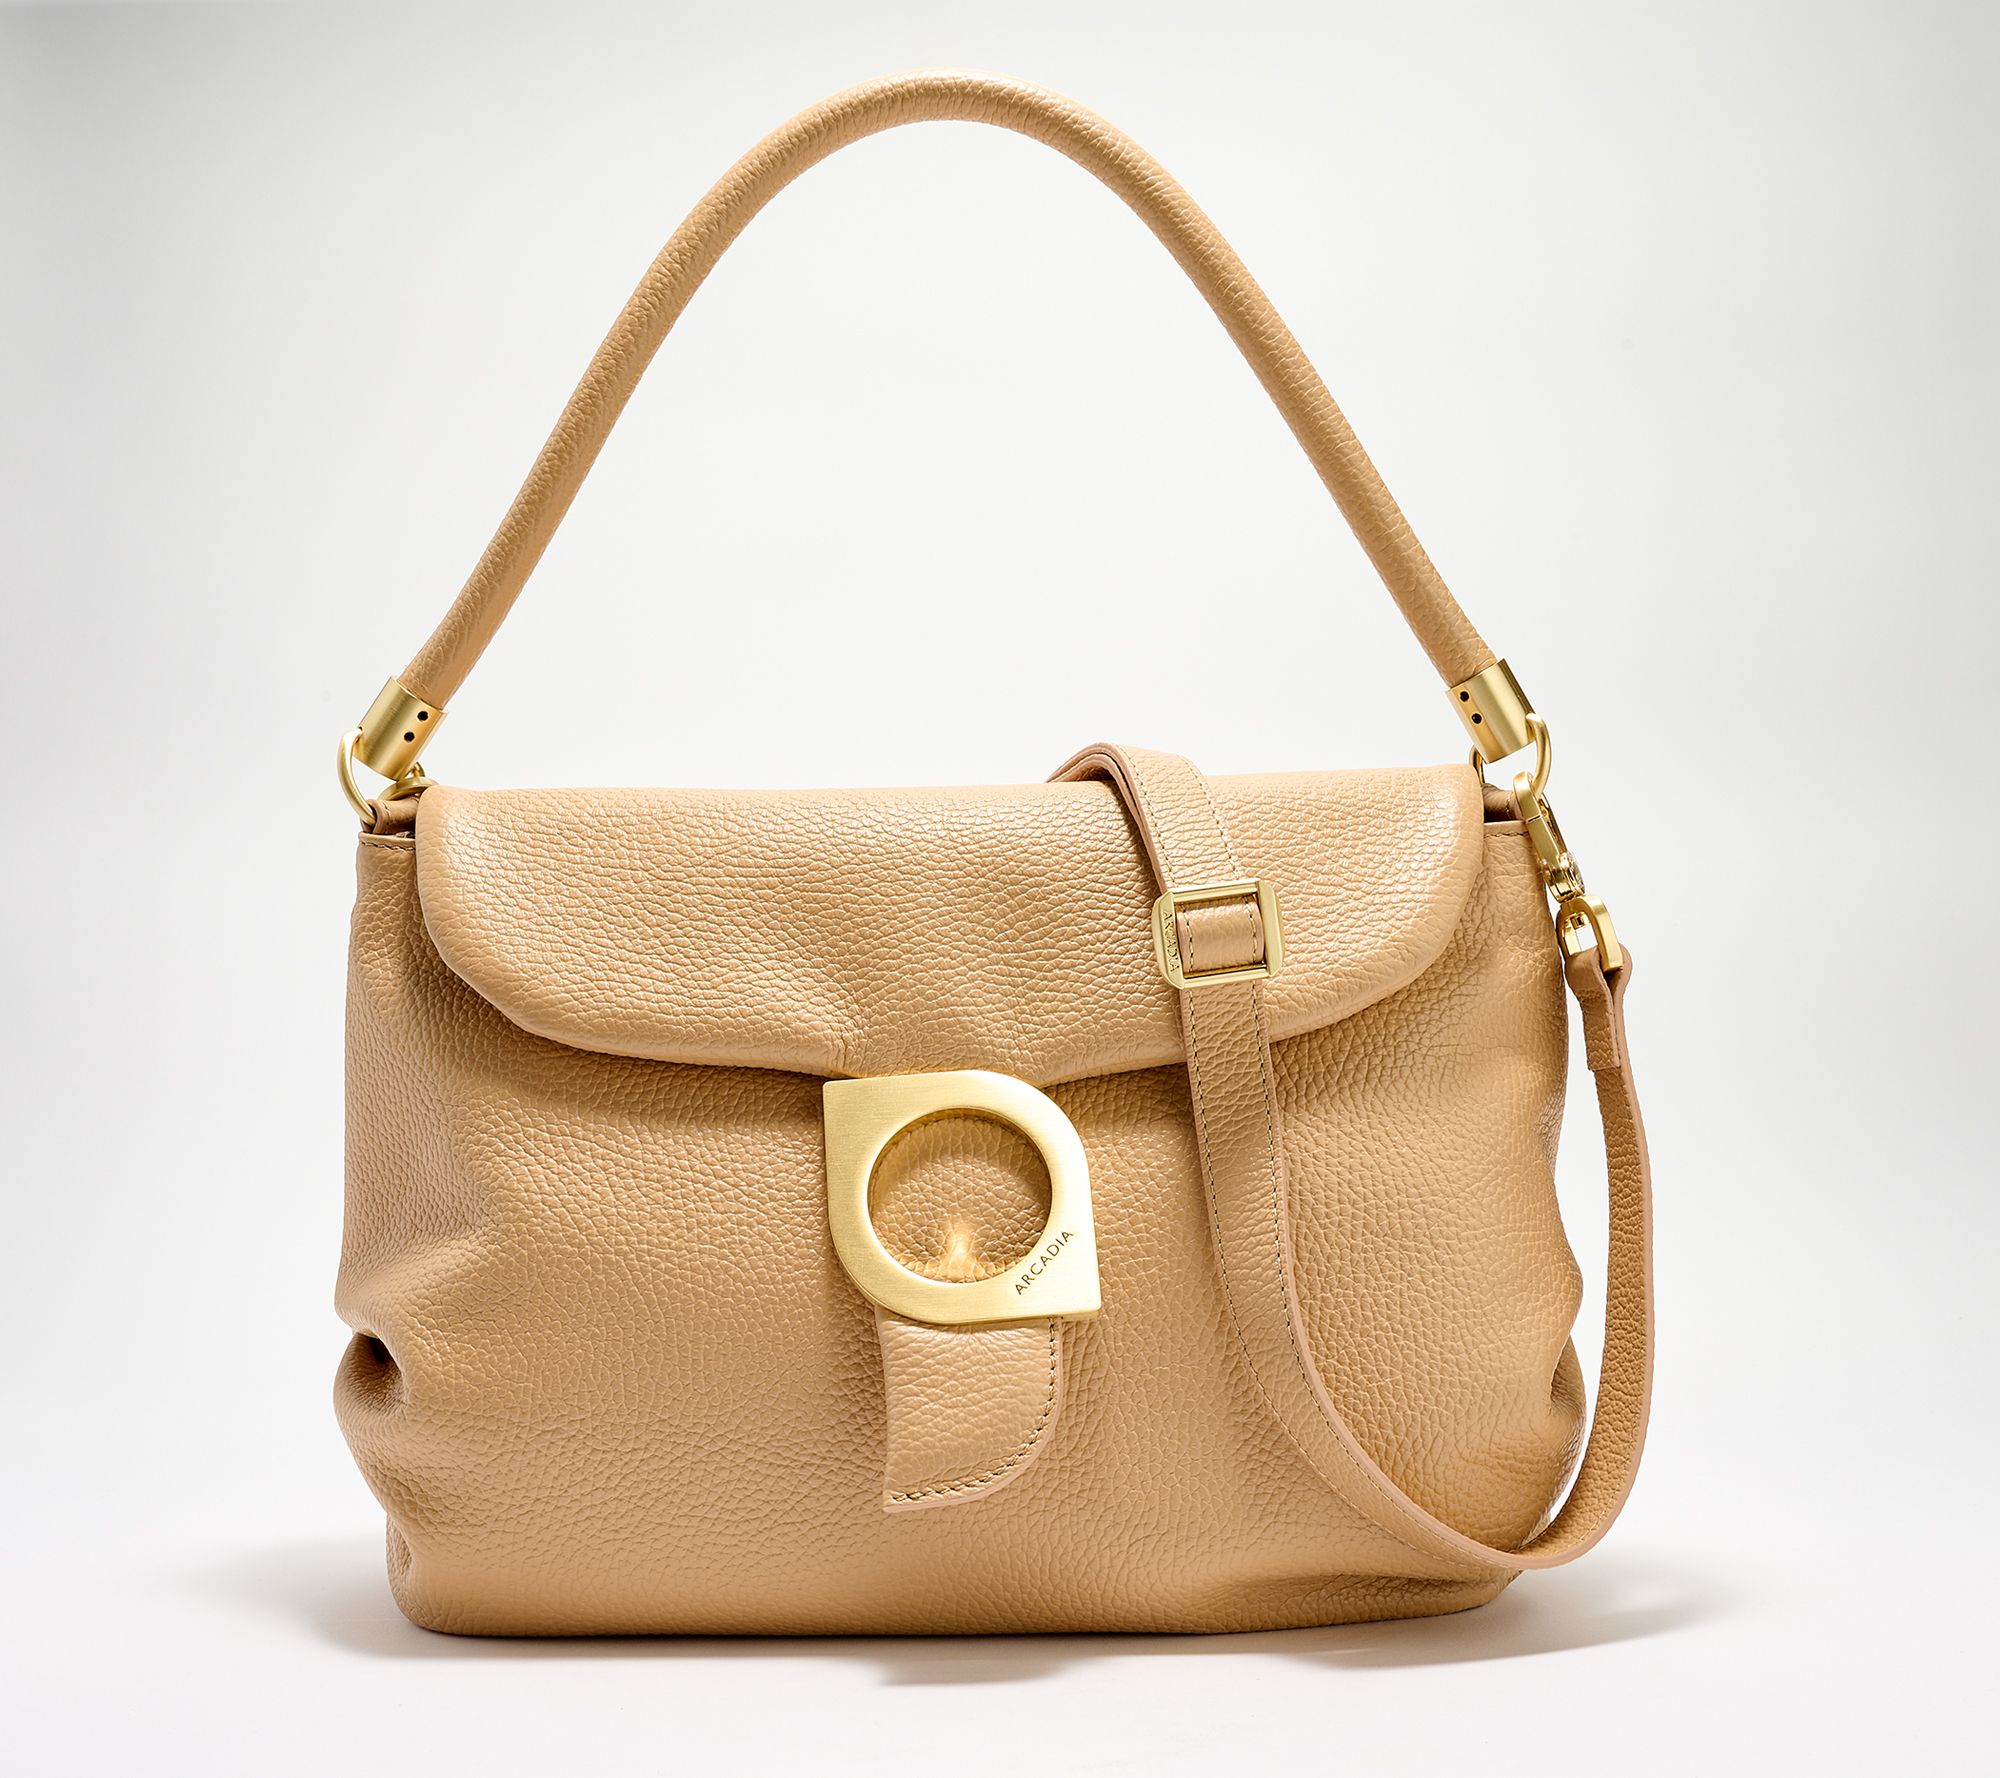 Handbags, Purses & Accessories  Designer Handbags & More 